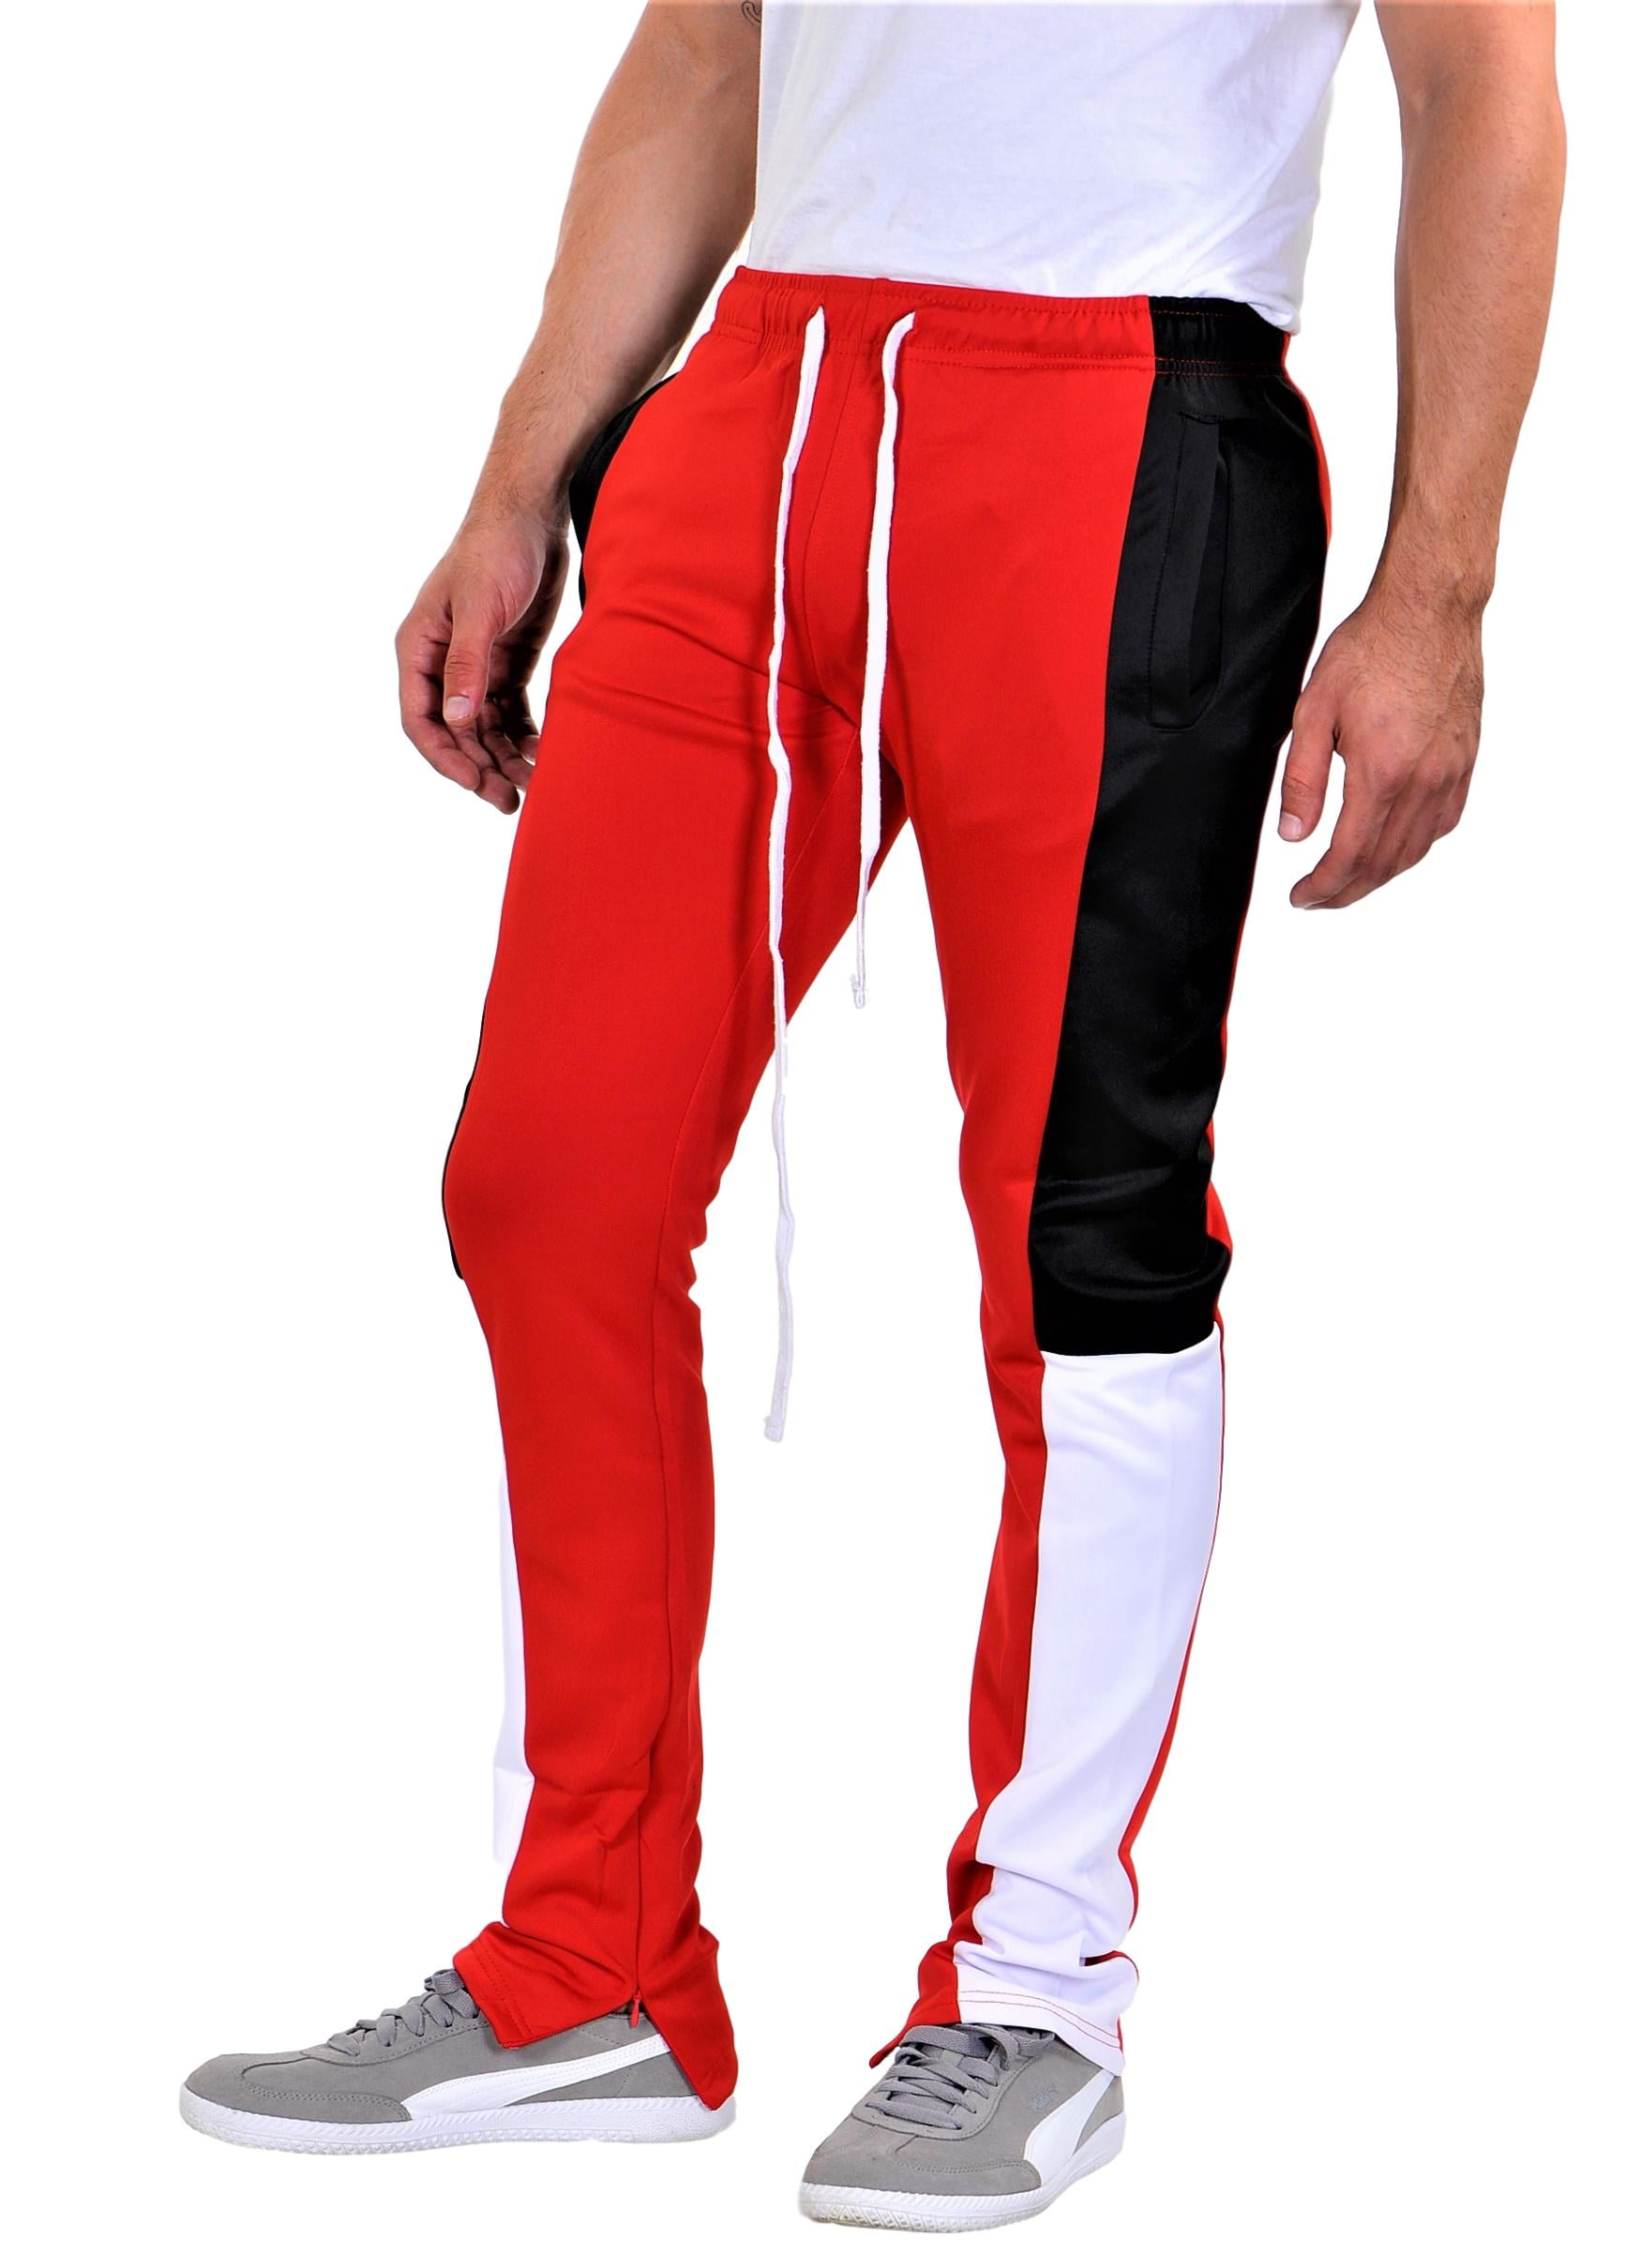 BKYS Men's Color Block Track Pants SM Red - Walmart.com